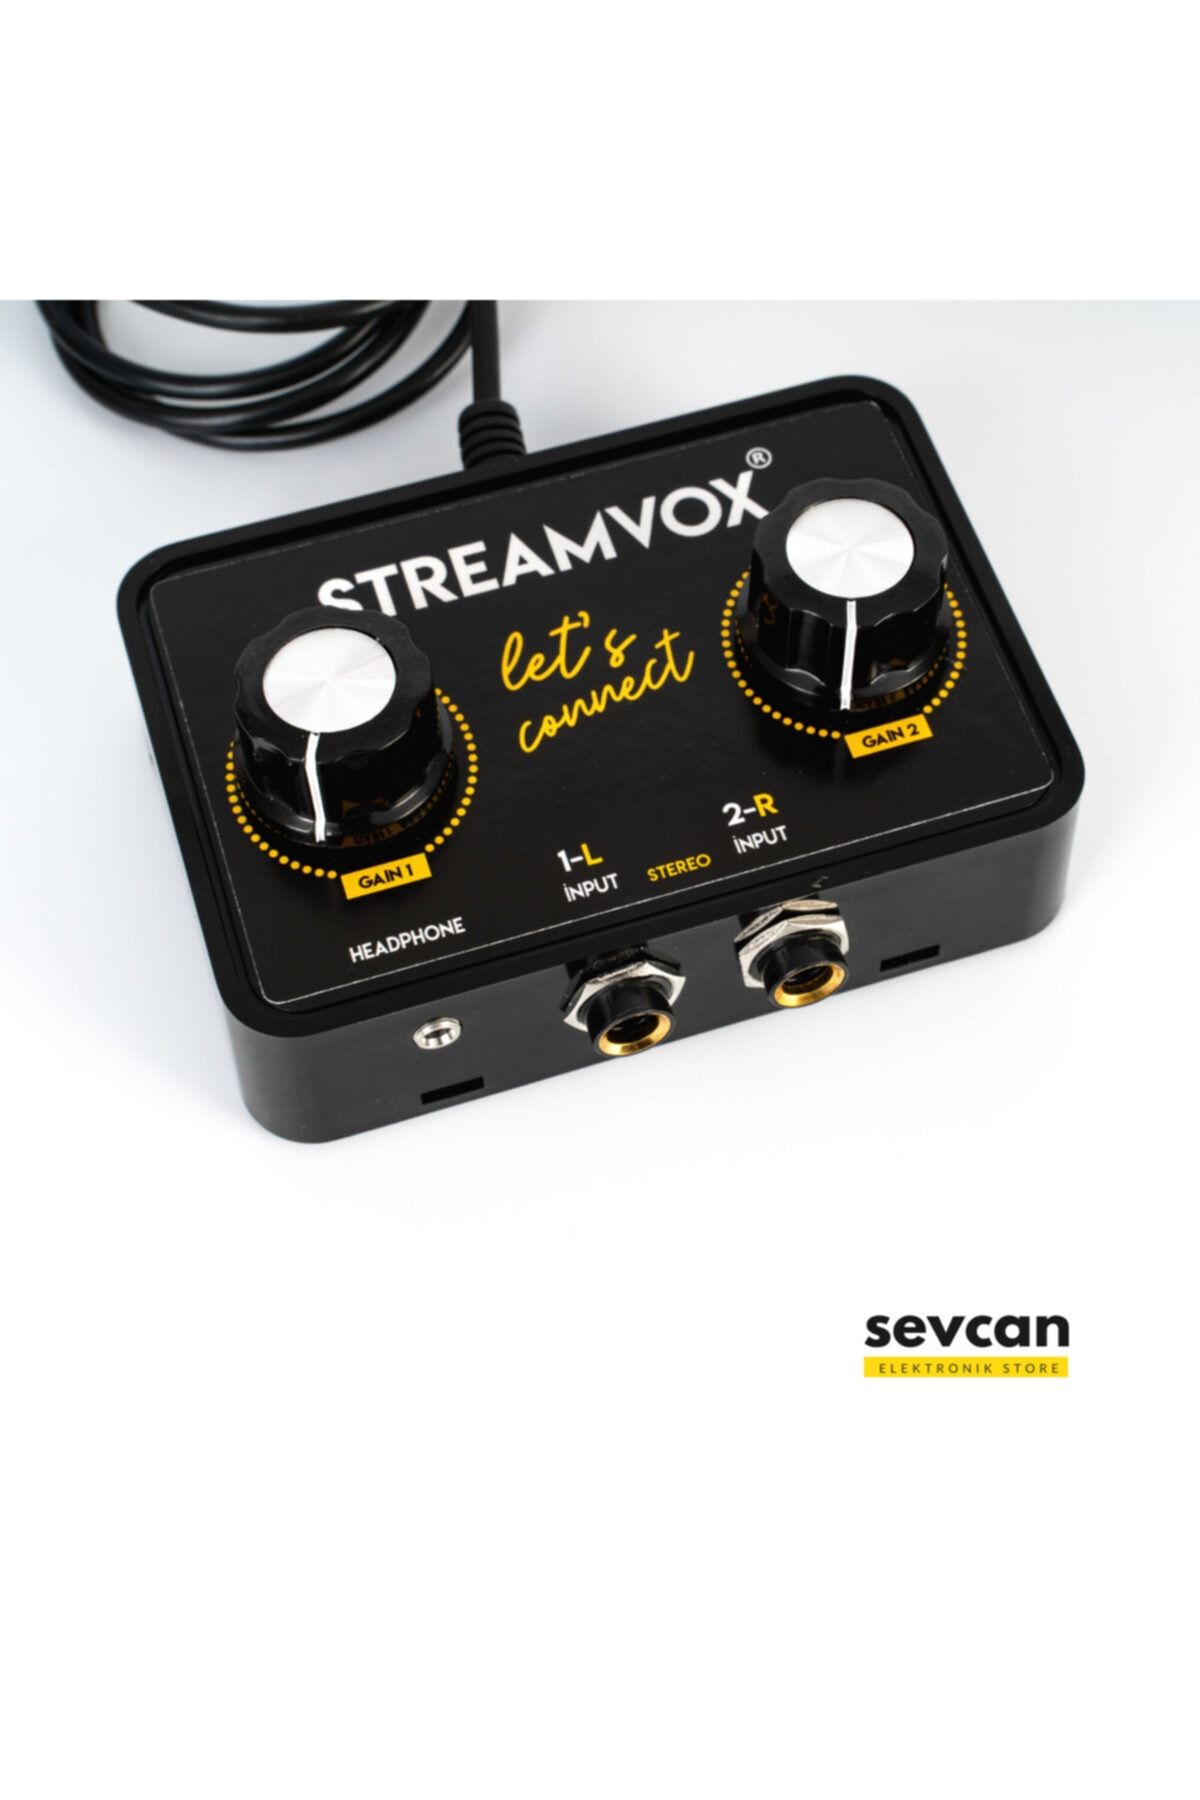 STREAM VOX Streamvox St1 G Stereo Input Canlı Yayın Sinyal Kablosu